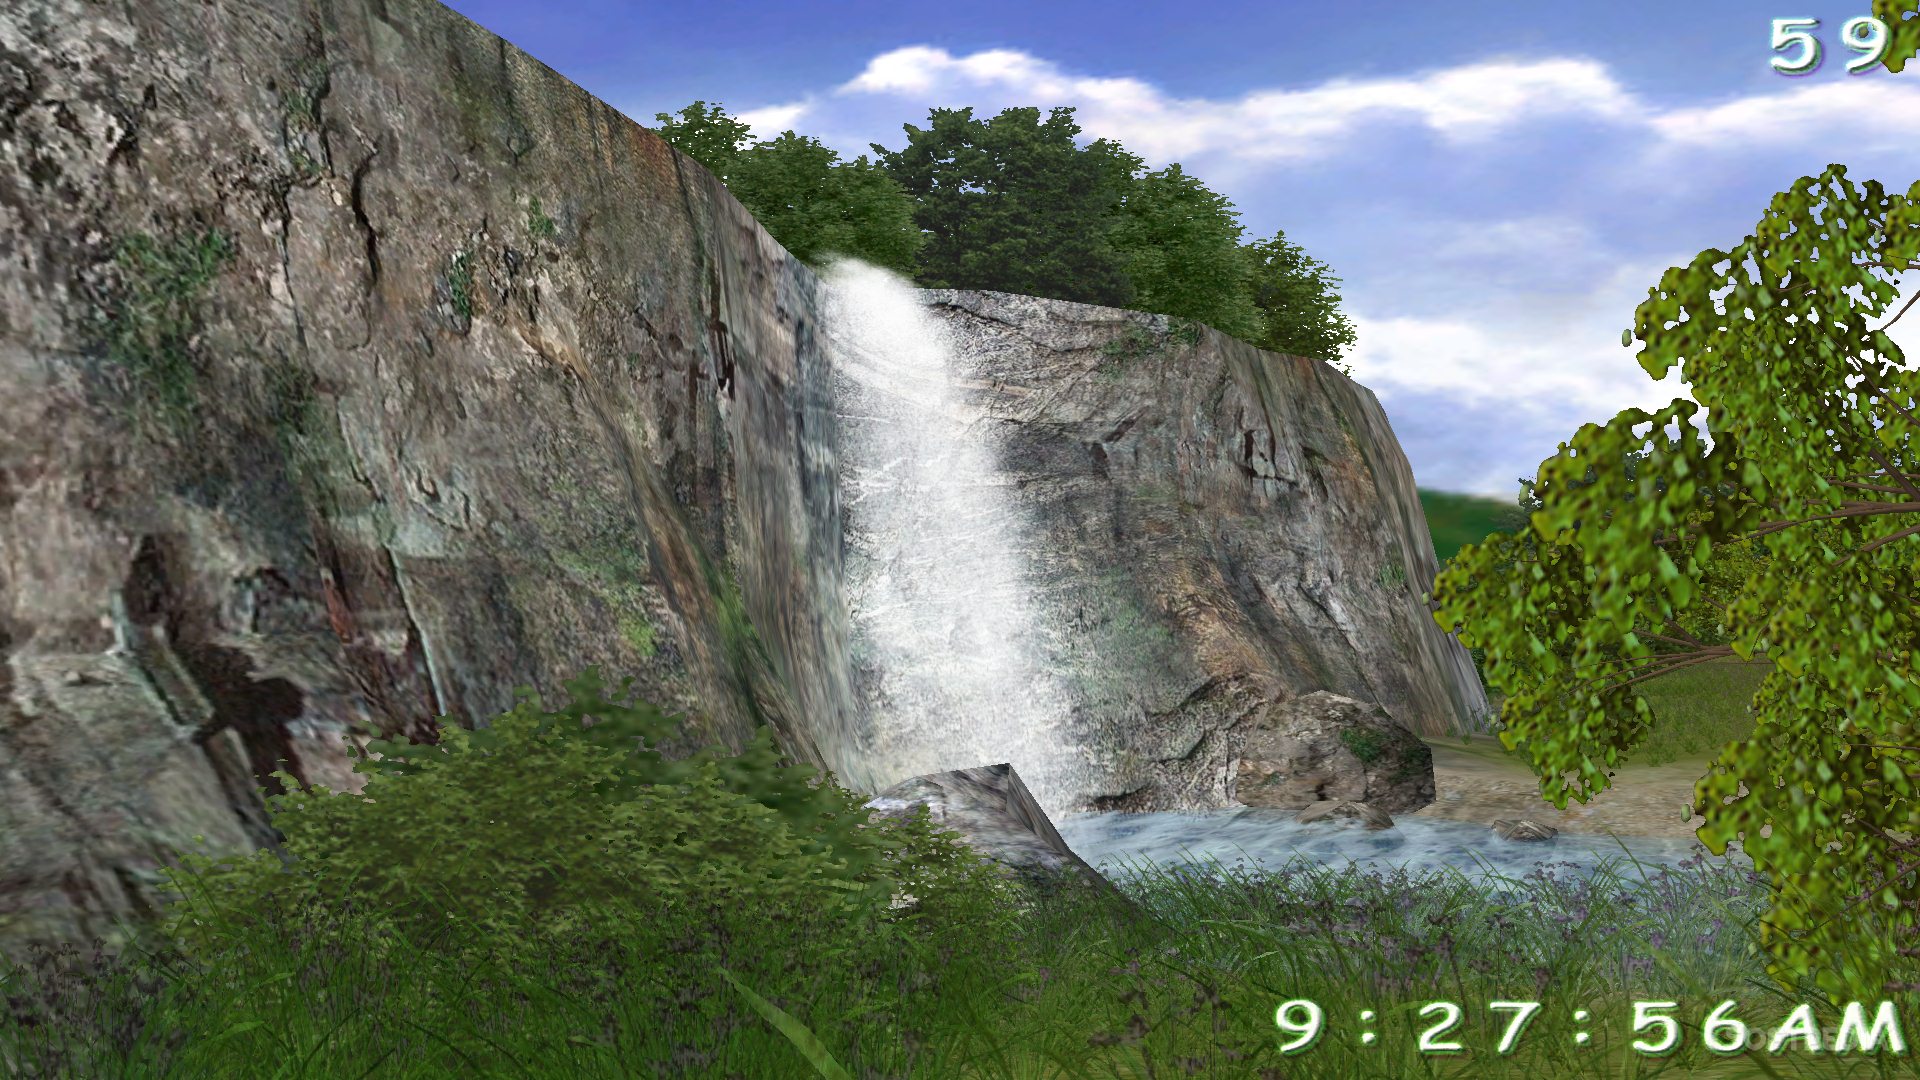 Live Waterfall Wallpaper Screensaver - 3d Waterfall Screensaver With Sound  - 1920x1080 Wallpaper 